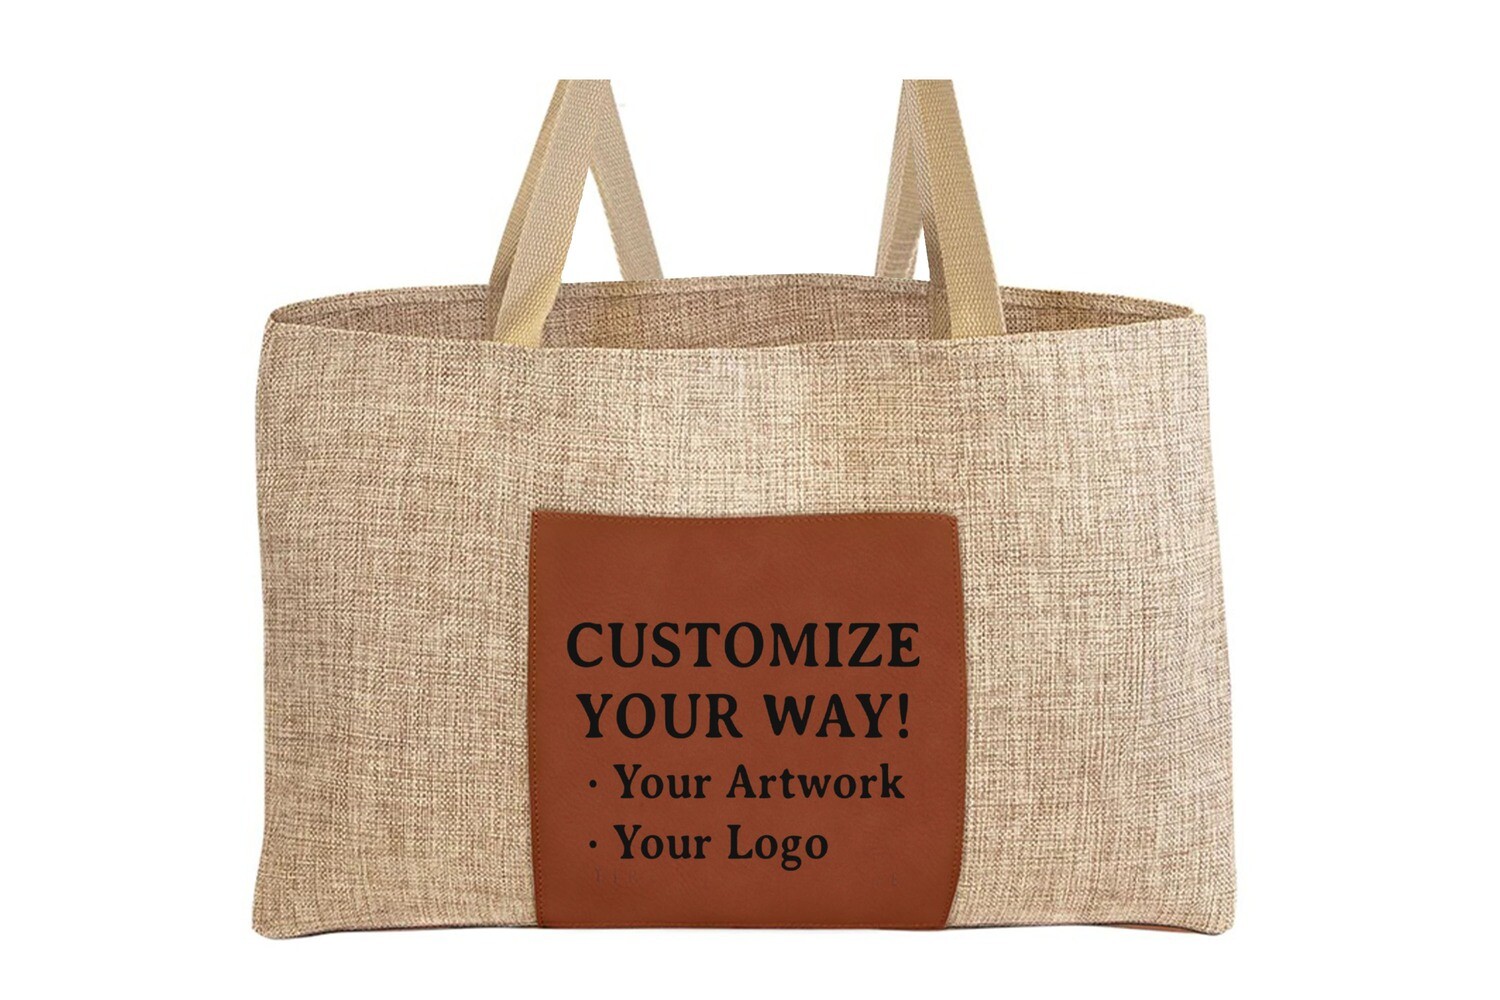 Burlap Tote Bag with Customize Your Way